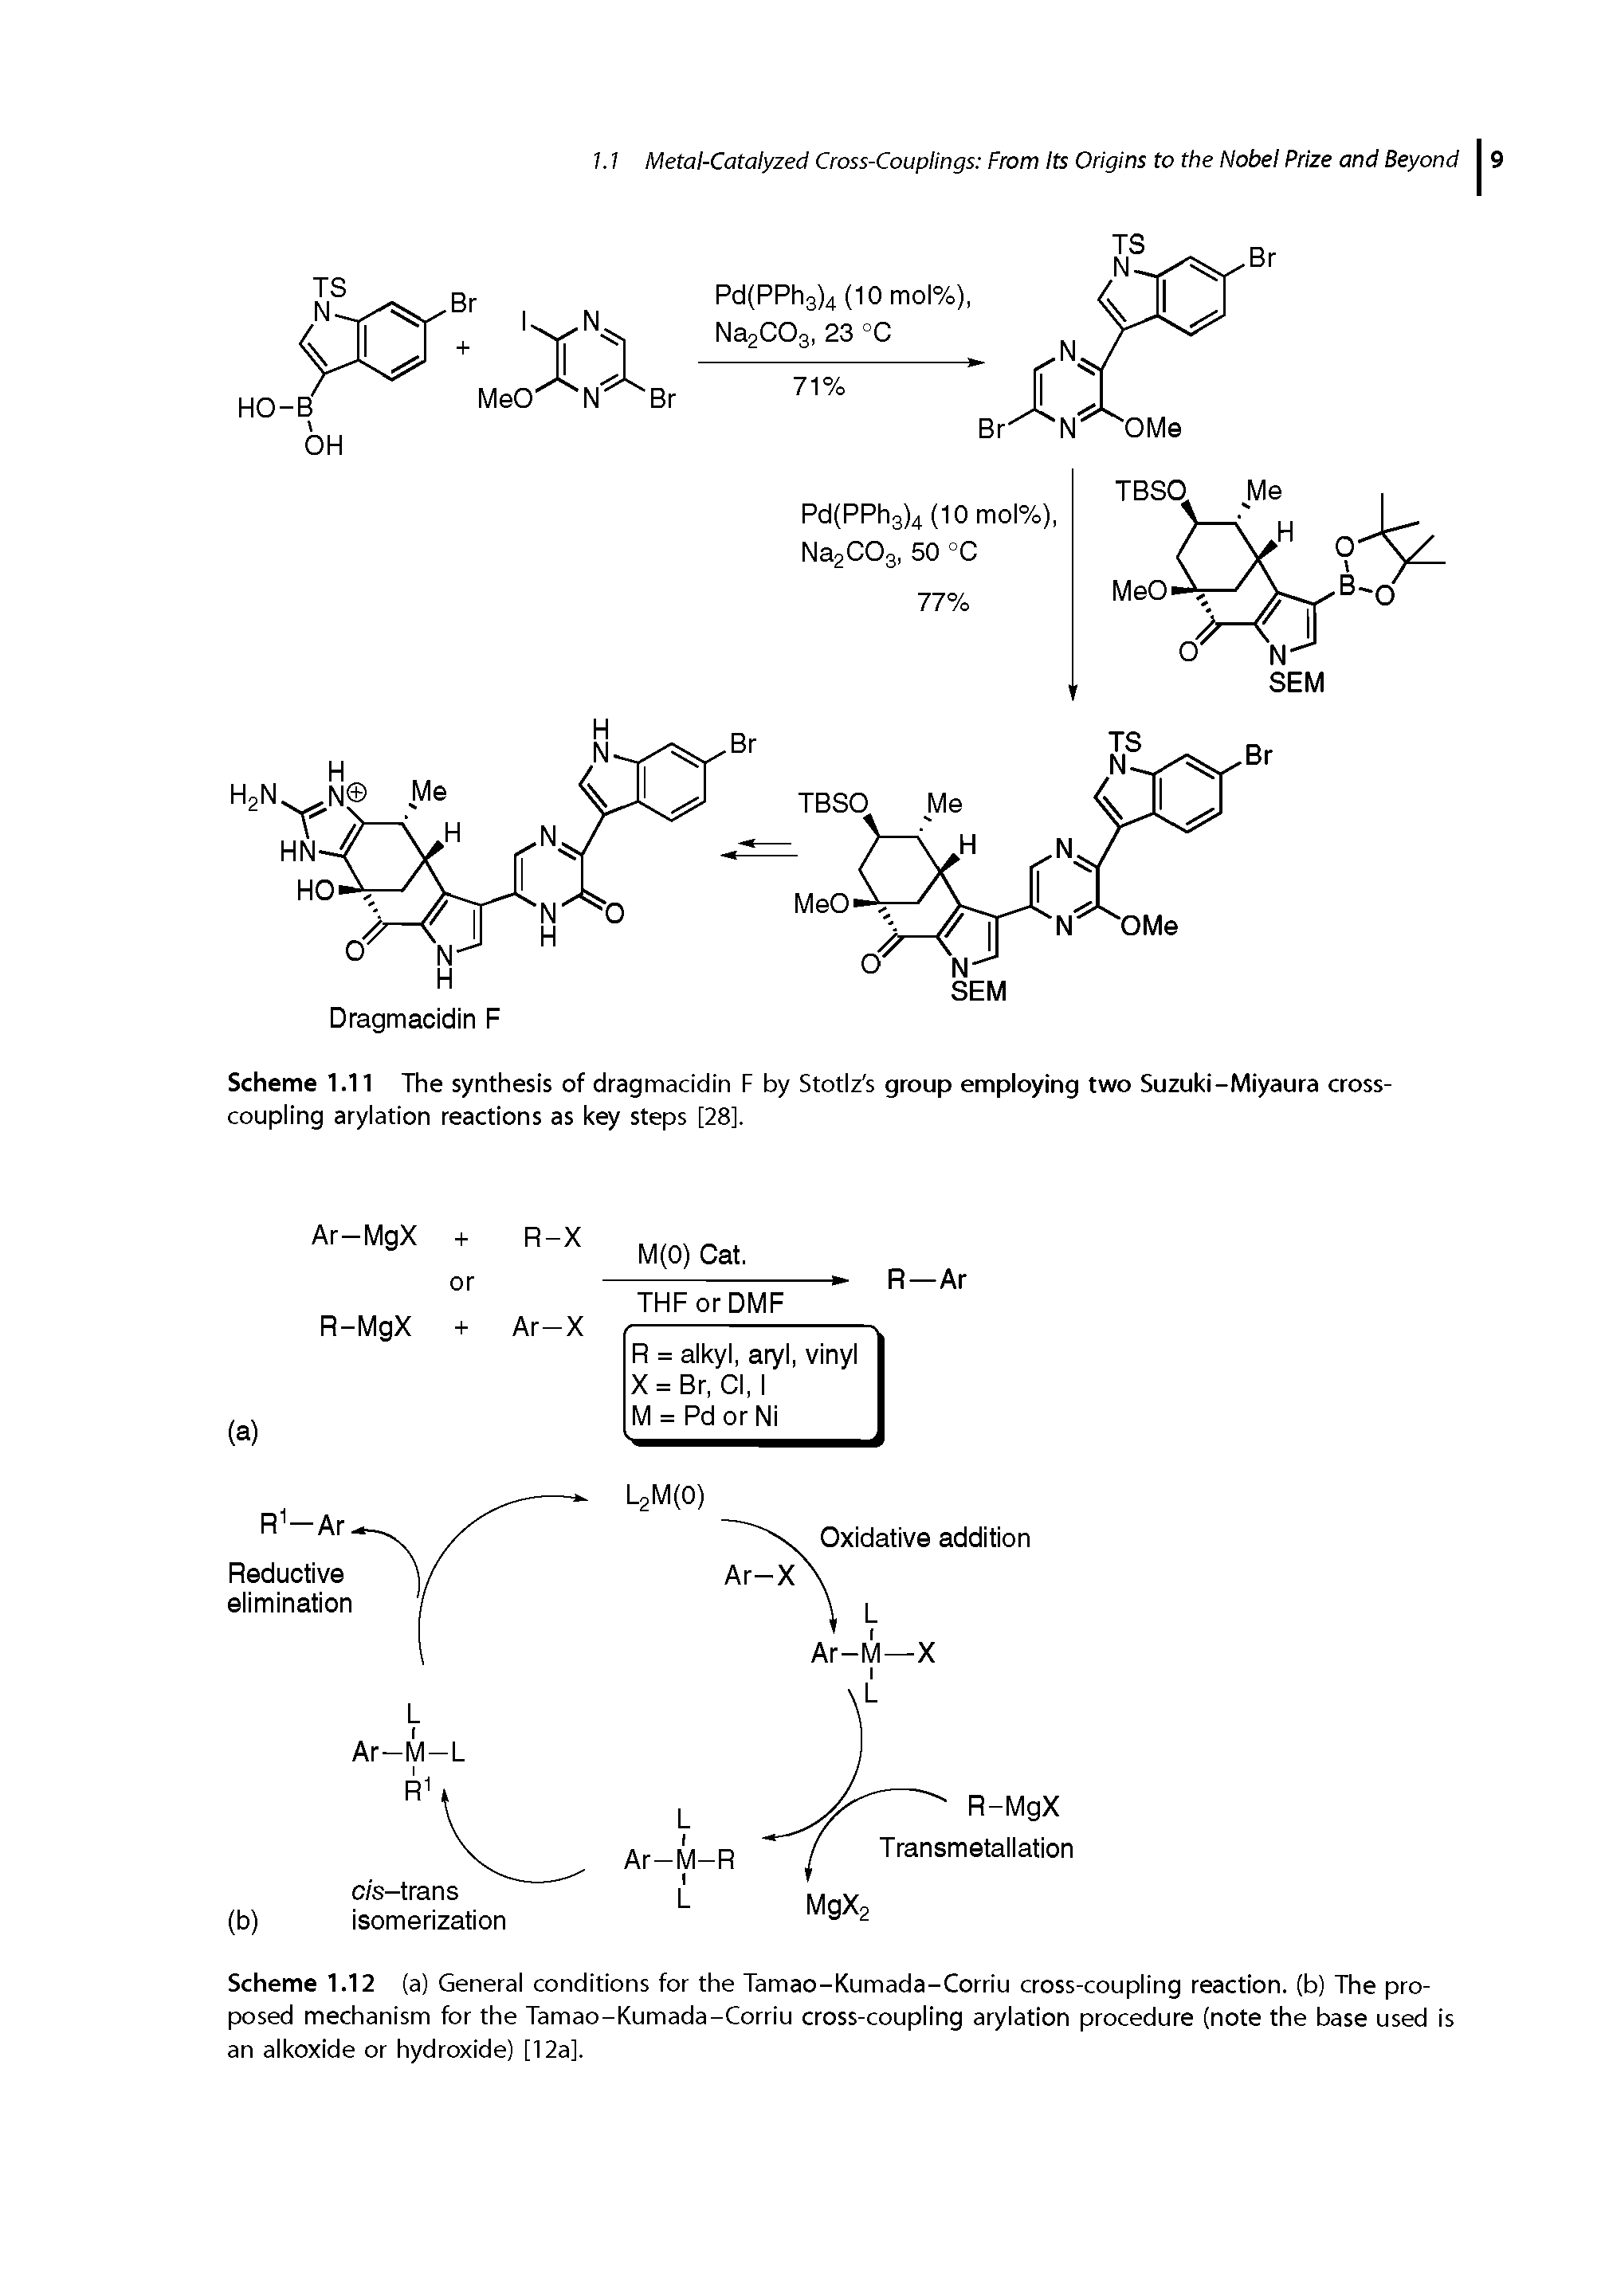 Scheme 1.11 The synthesis of dragmacidin F by Stotiz s group employing two Suzuki-Miyaura crosscoupling arylation reactions as key steps [28].